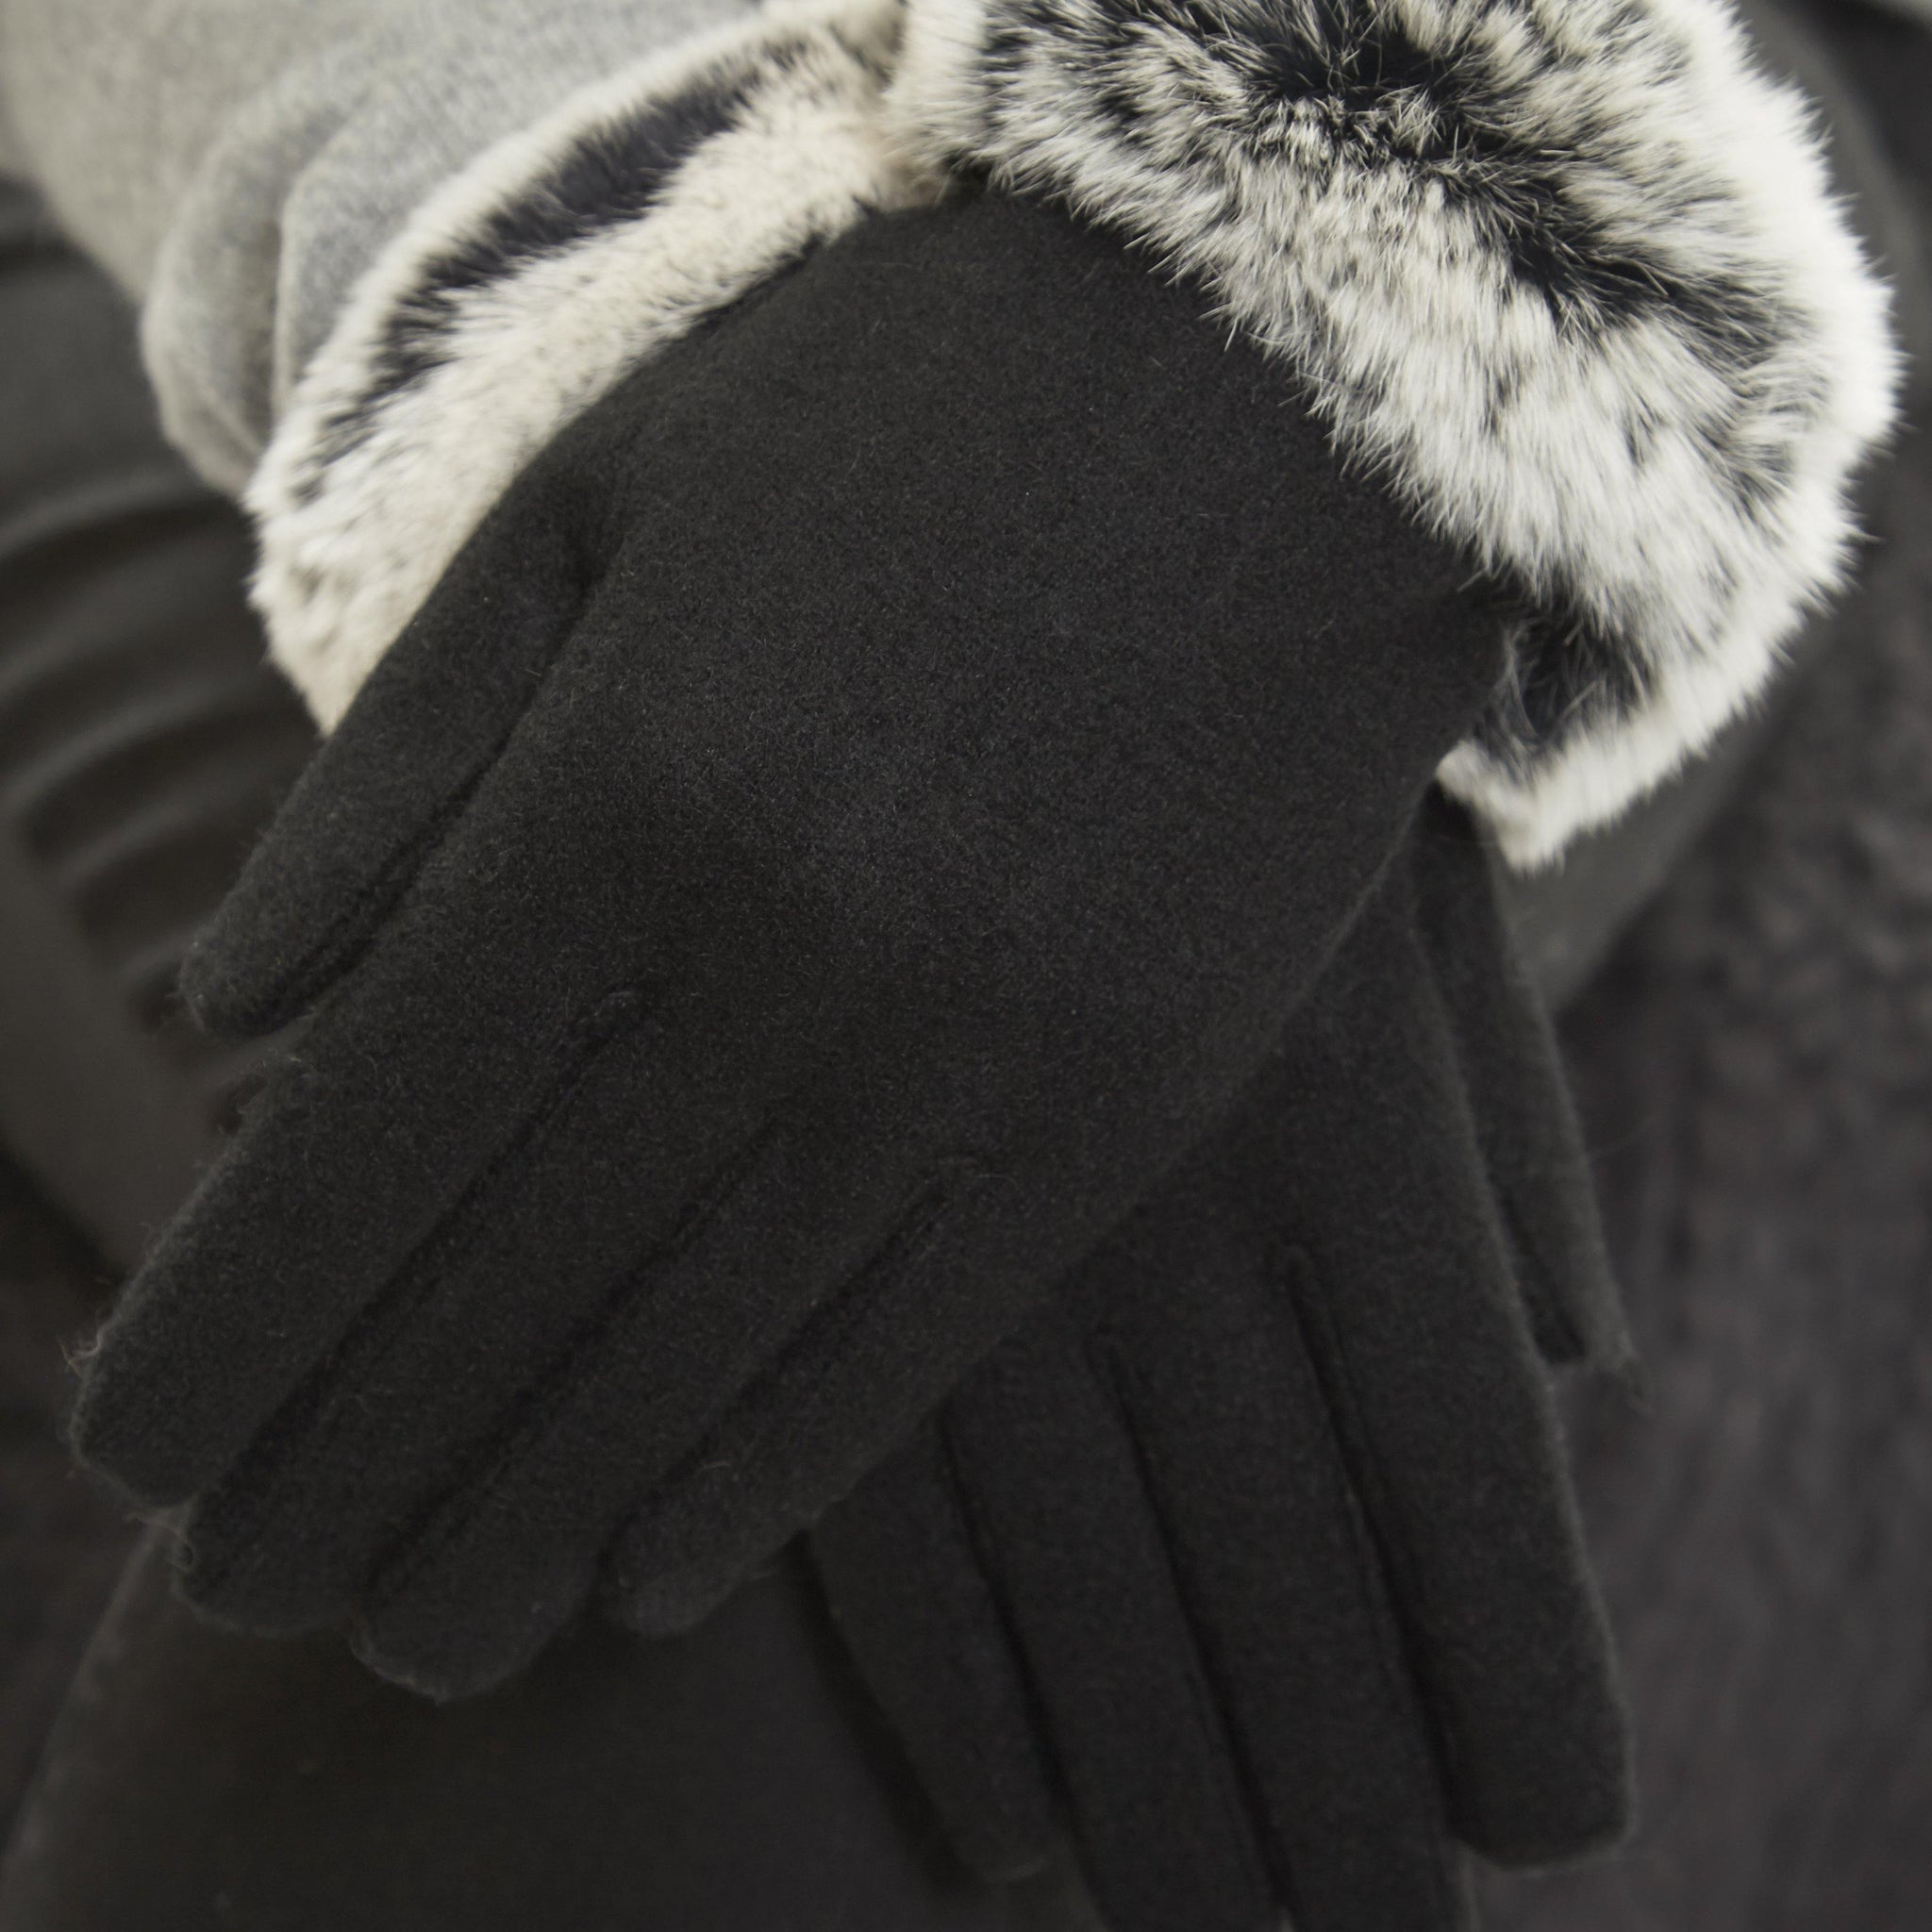 Black Gloves With Black Snowtop Rex Rabbit Fur Trim - Jessimara